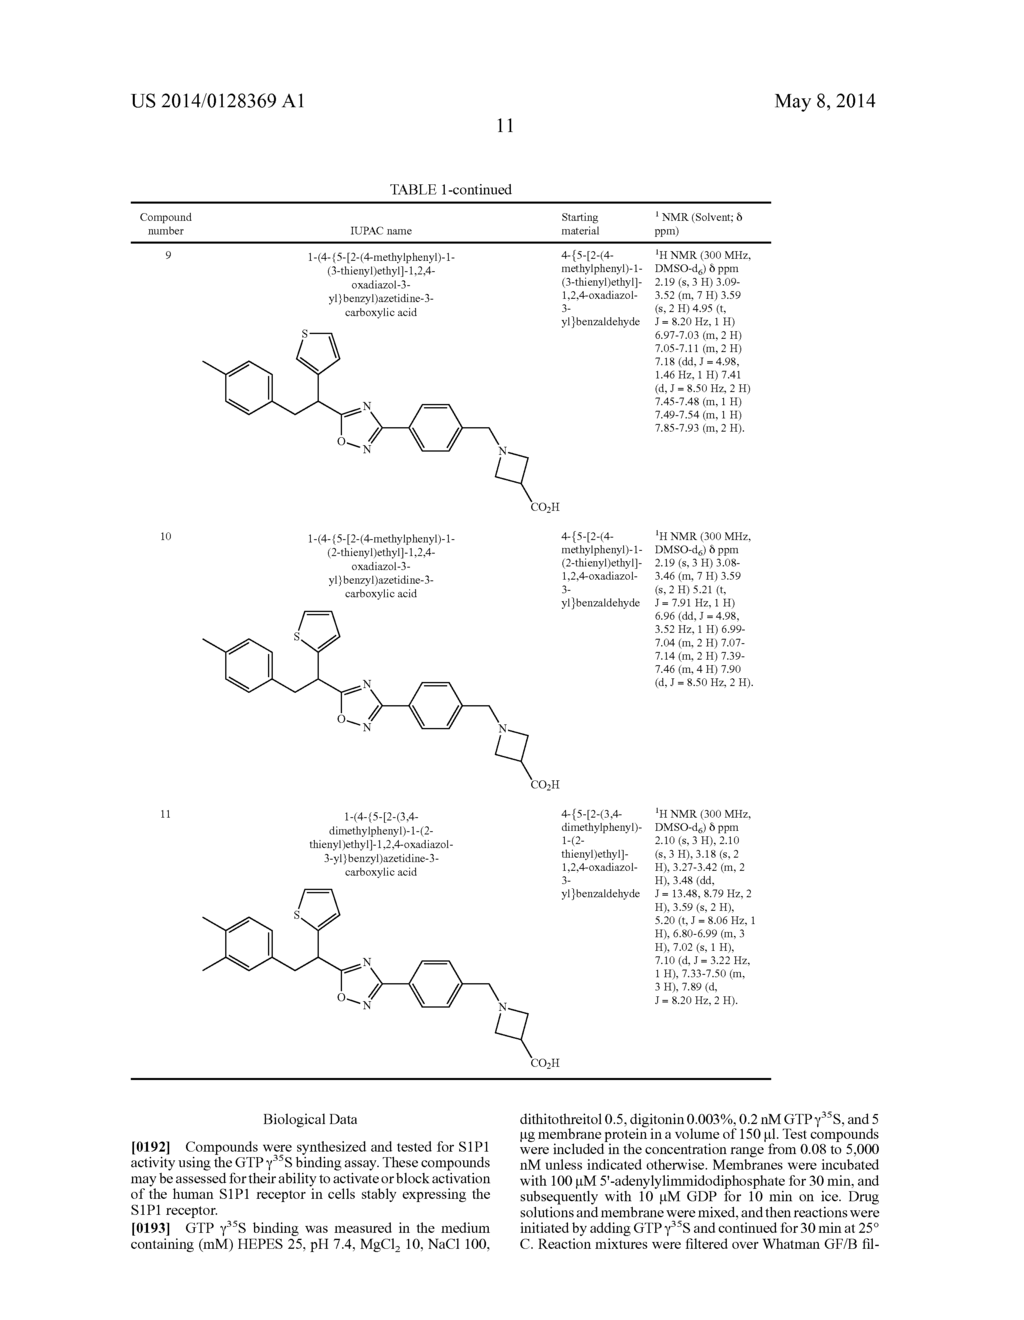 NOVEL BENZYL AZETIDINE DERIVATIVES AS SPHINGOSINE 1-PHOSPHATE (S1P)     RECEPTOR MODULATORS - diagram, schematic, and image 12